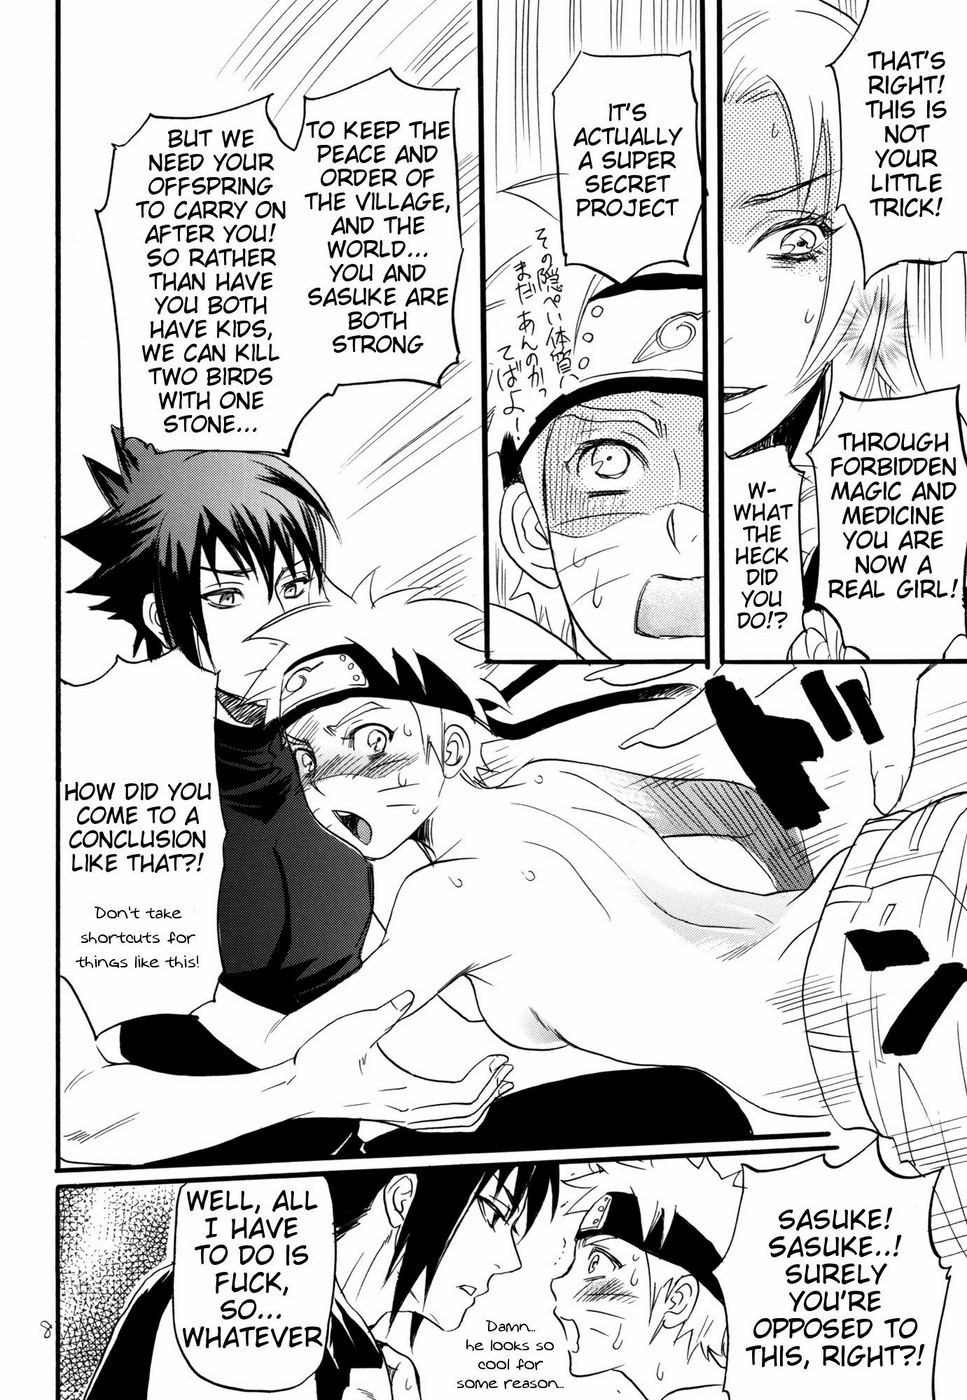 Manga Naruto Porn image #9848